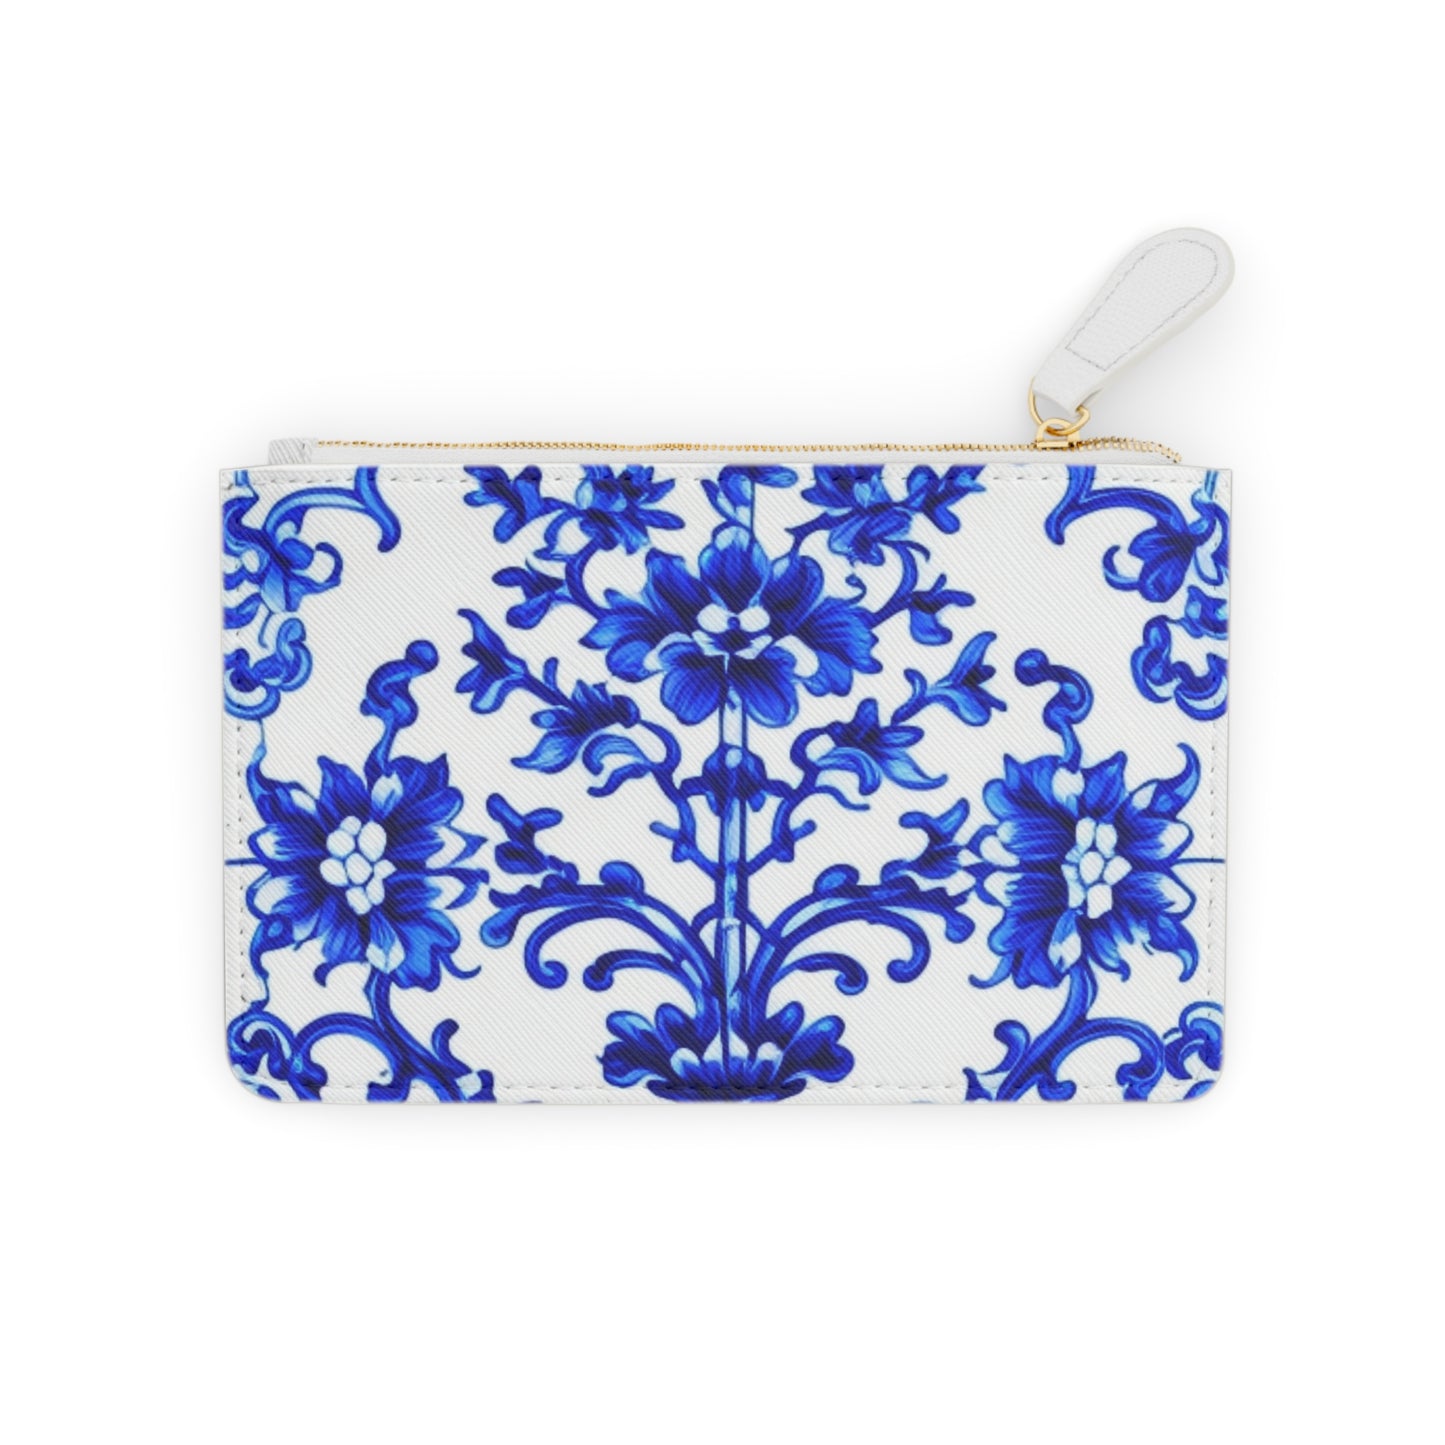 Portuguese Blue and White Tile Pattern Coin Purse Lipstick Mini Pouch Clutch Bag